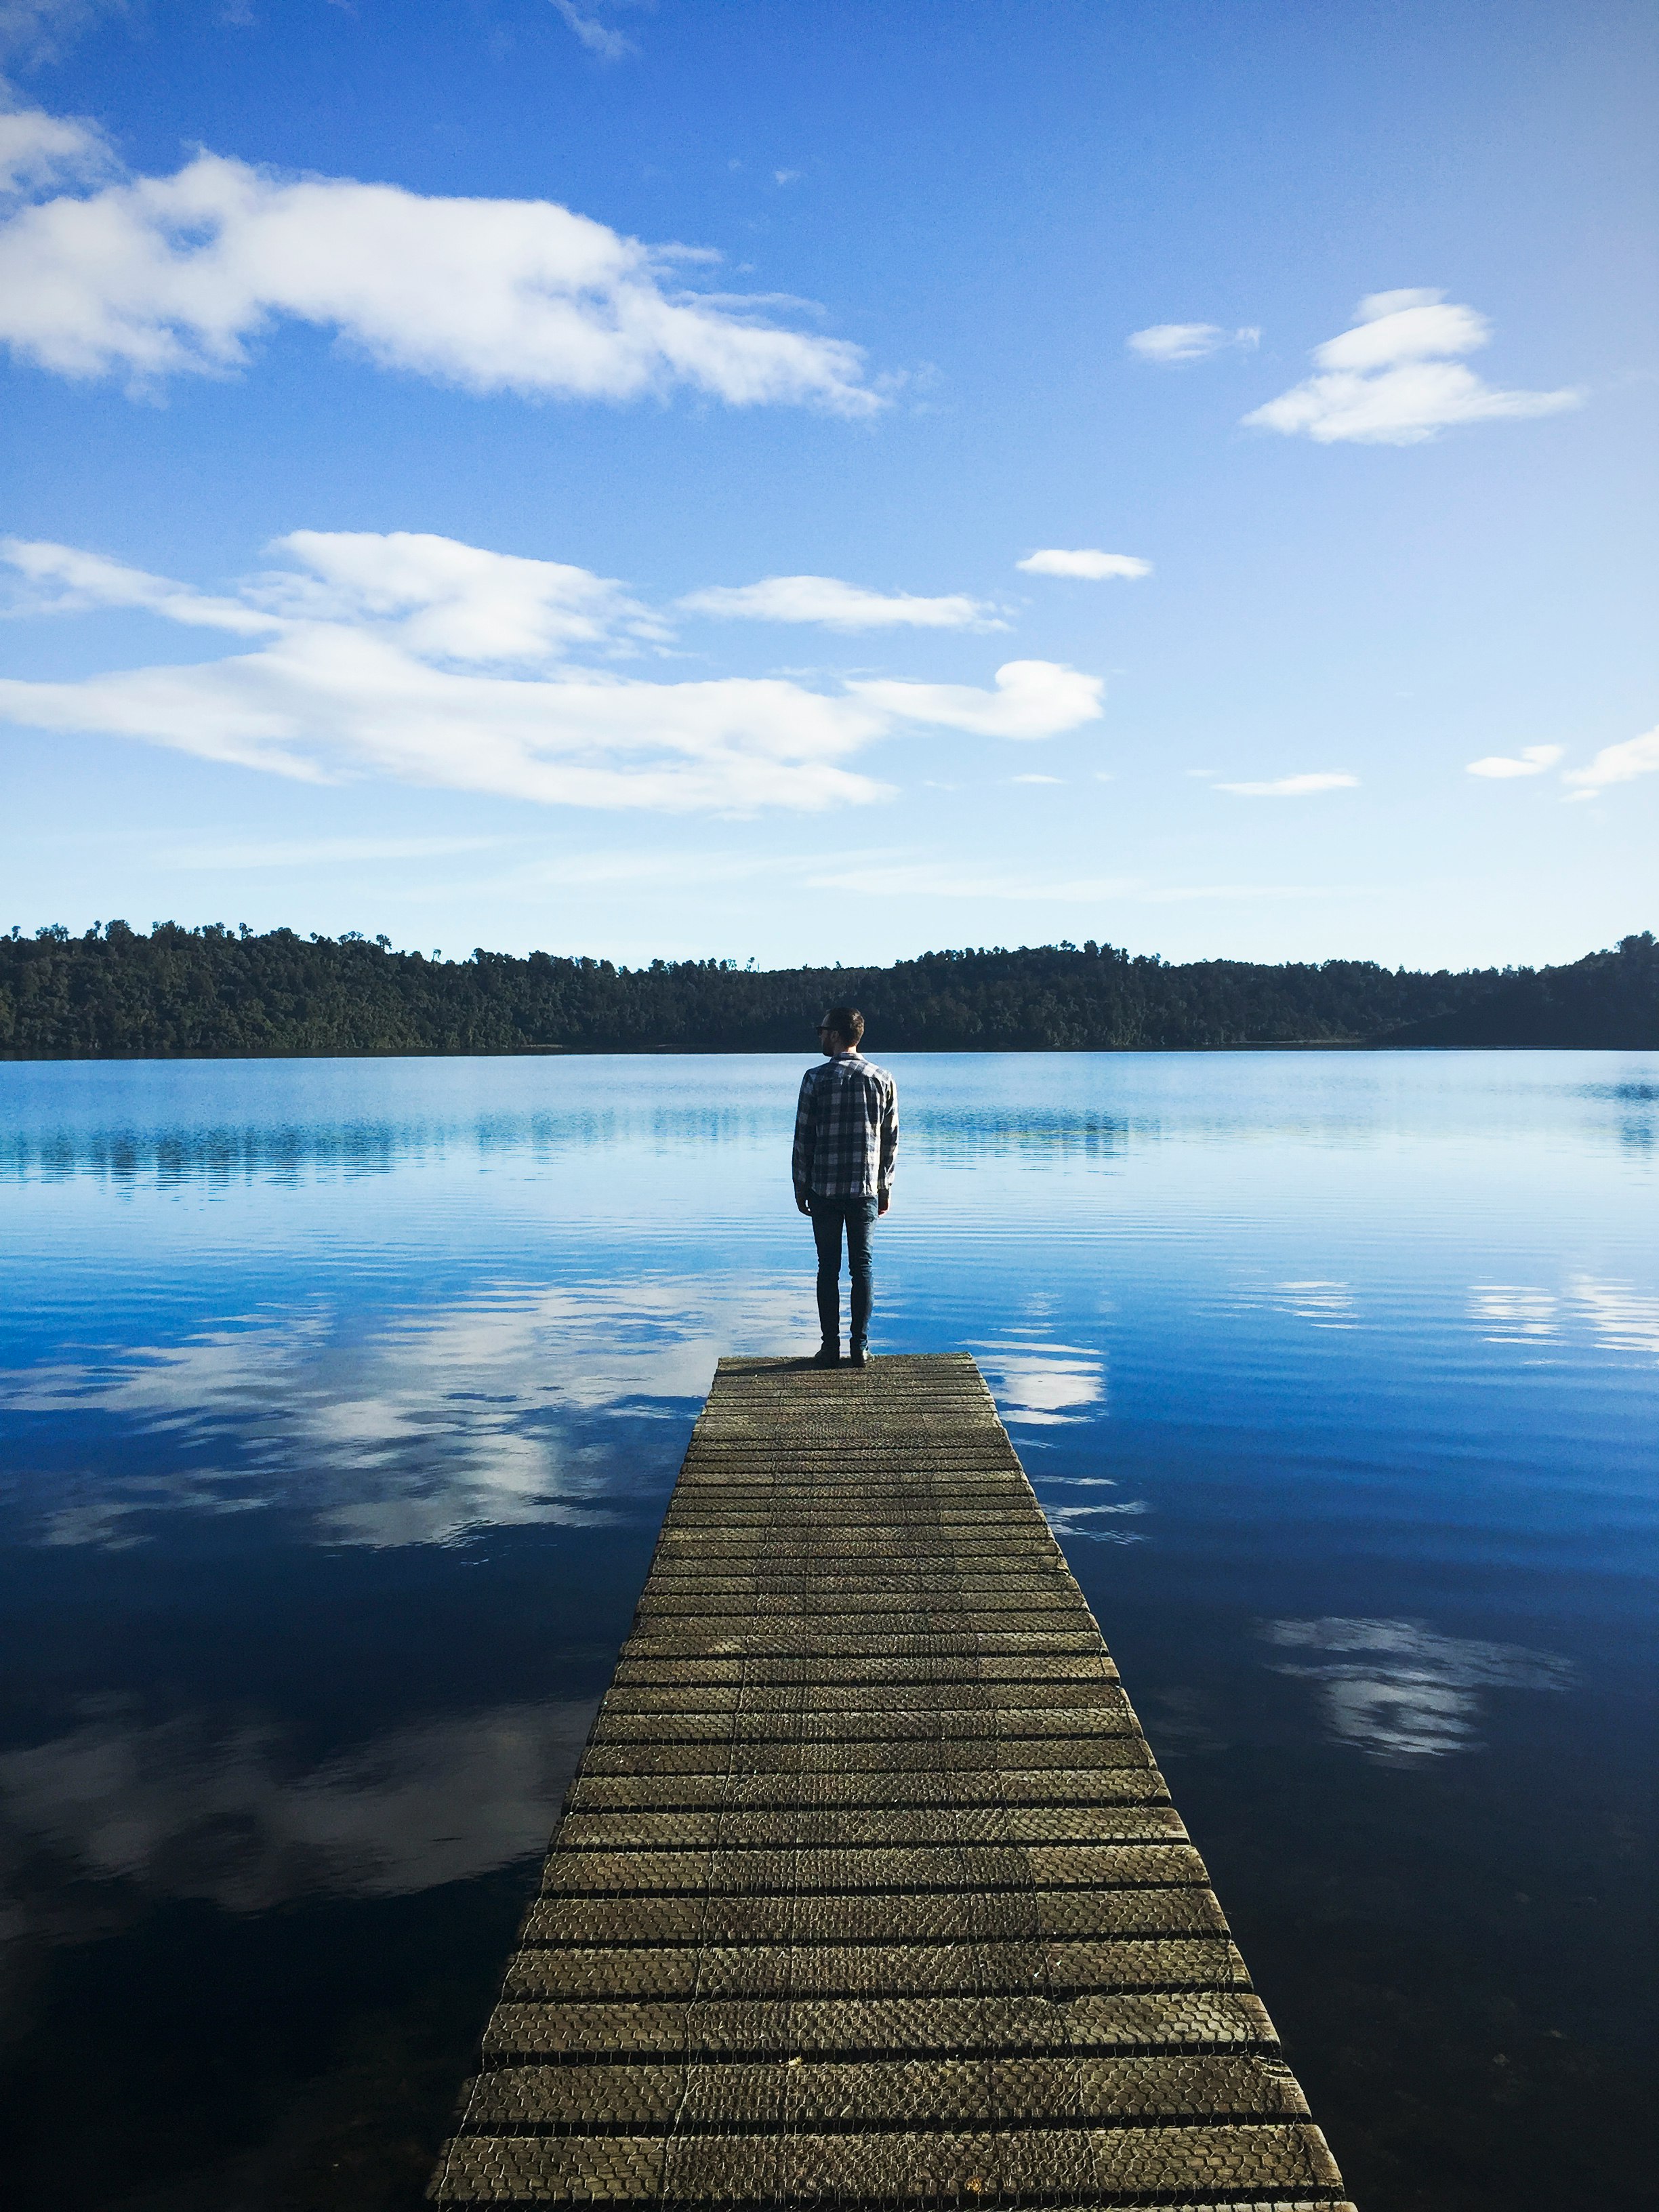 man standing on lake dock watching water under blue sky during daytime